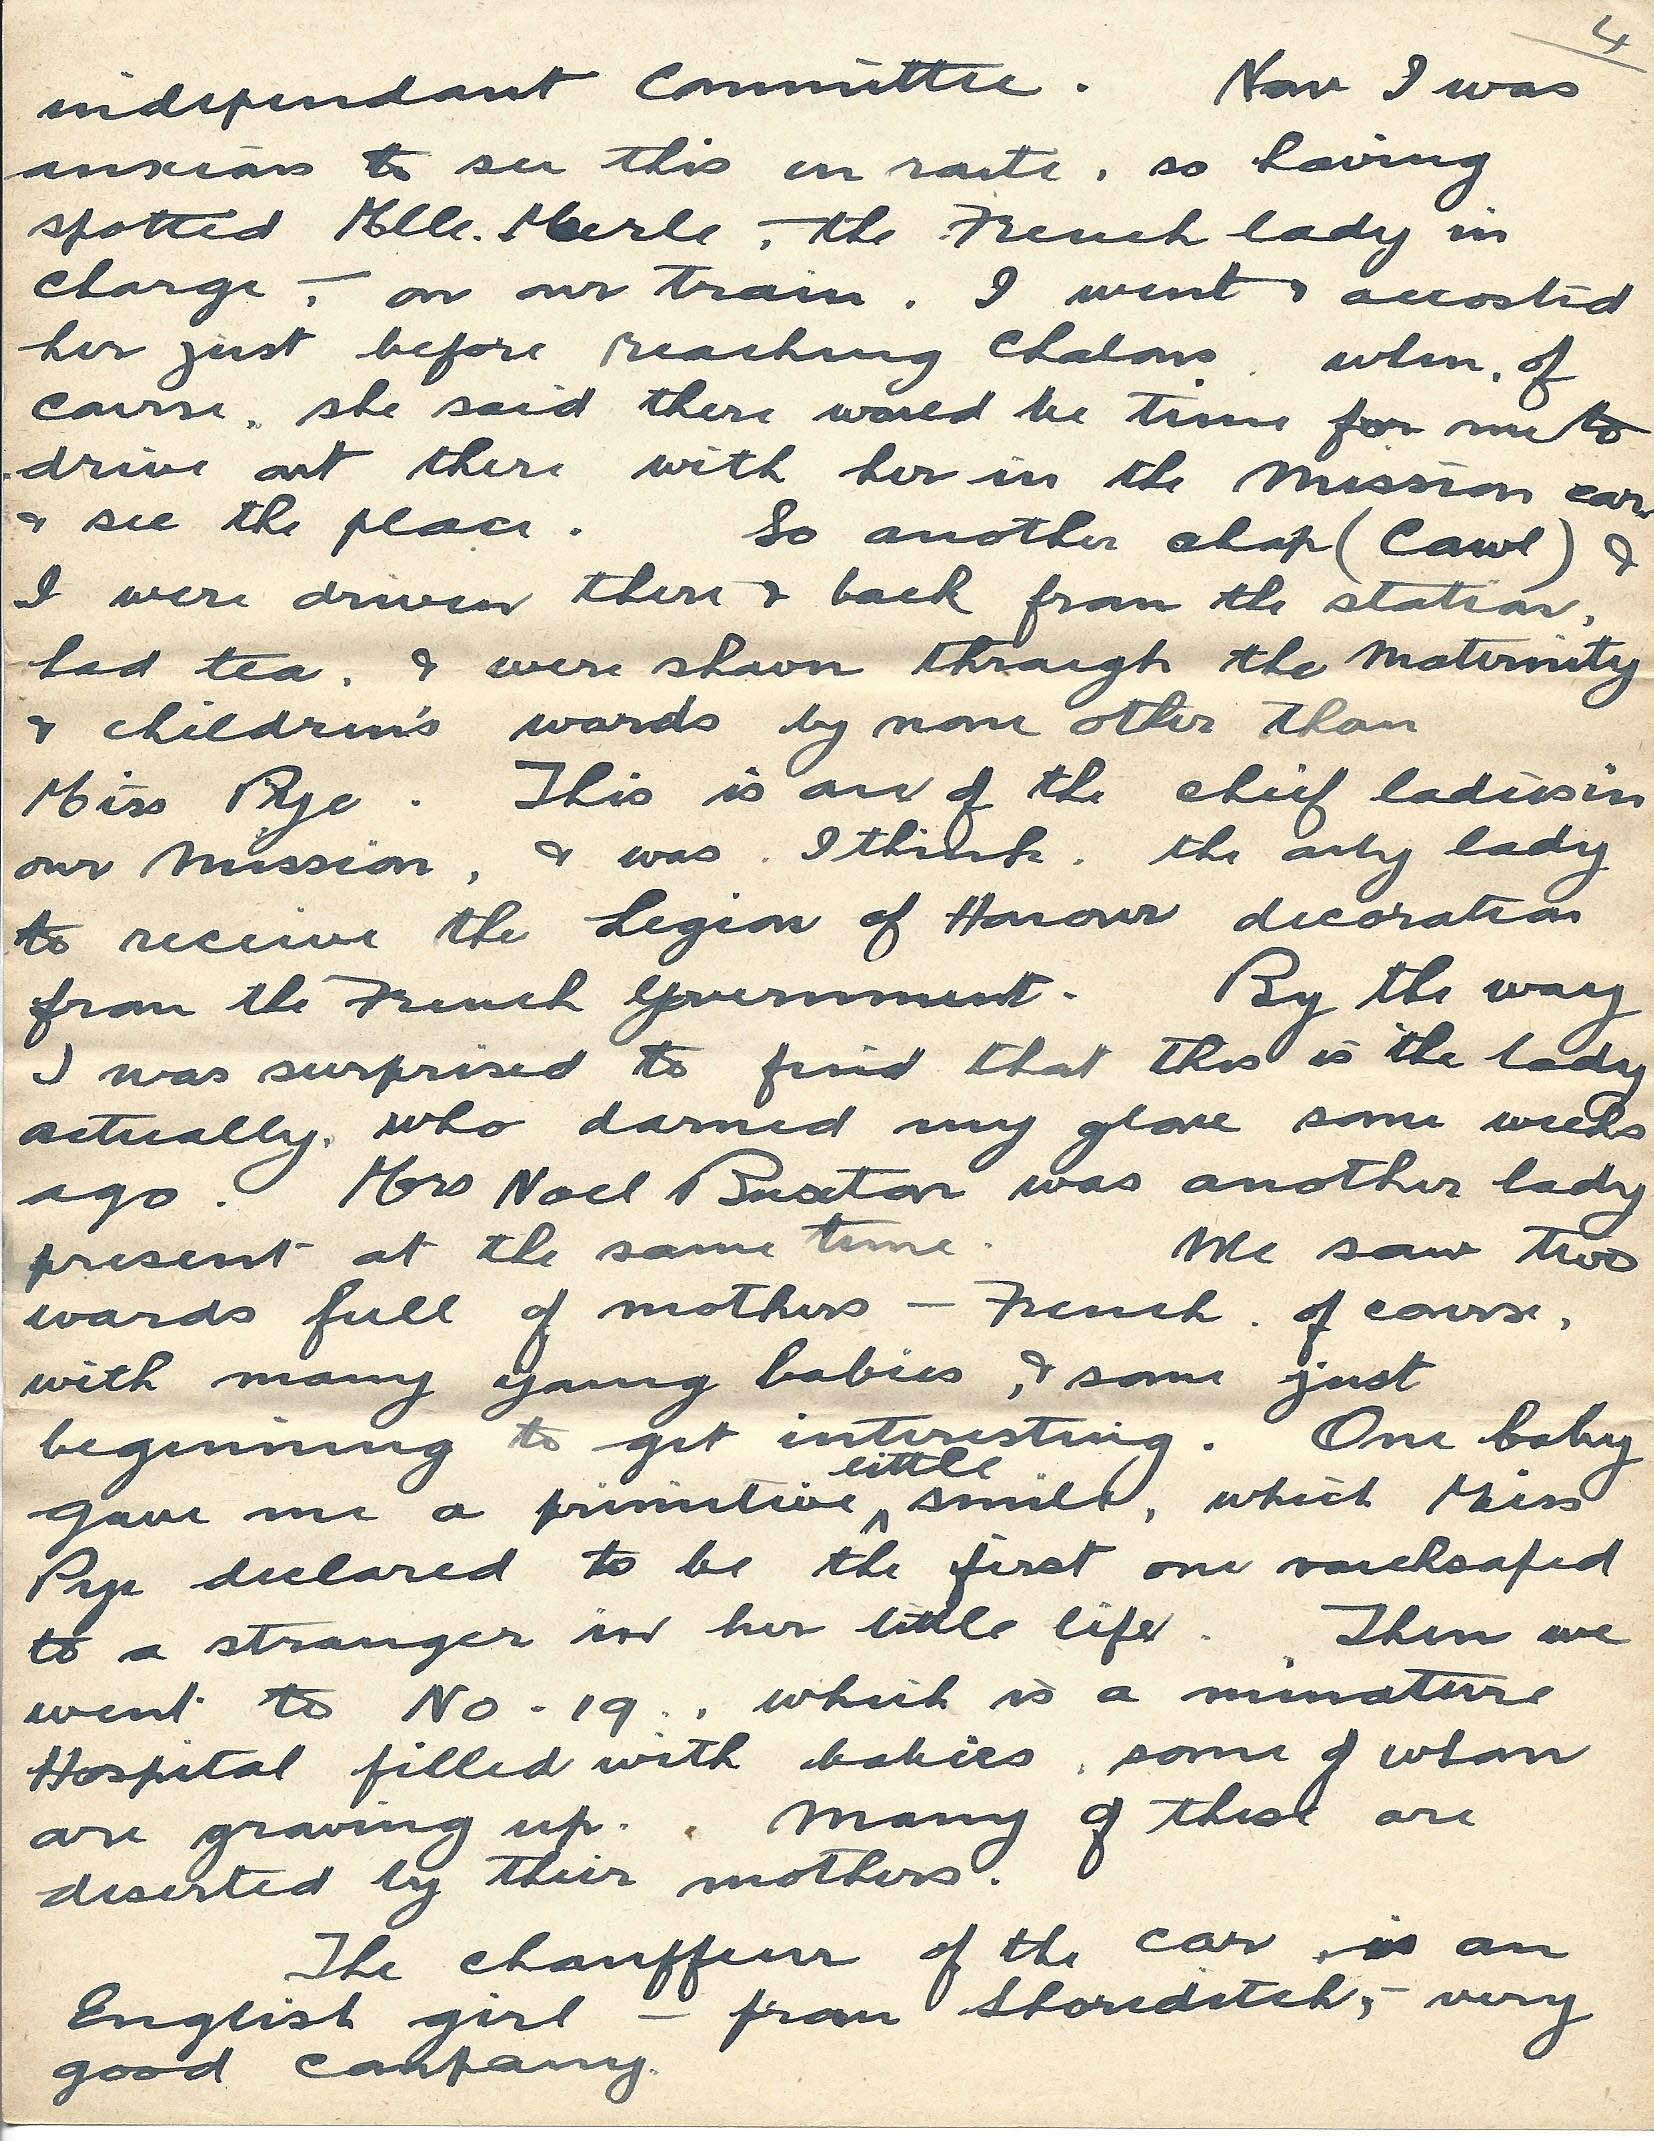 1919-11-13 p4 Donald Bearman to his father Thomas